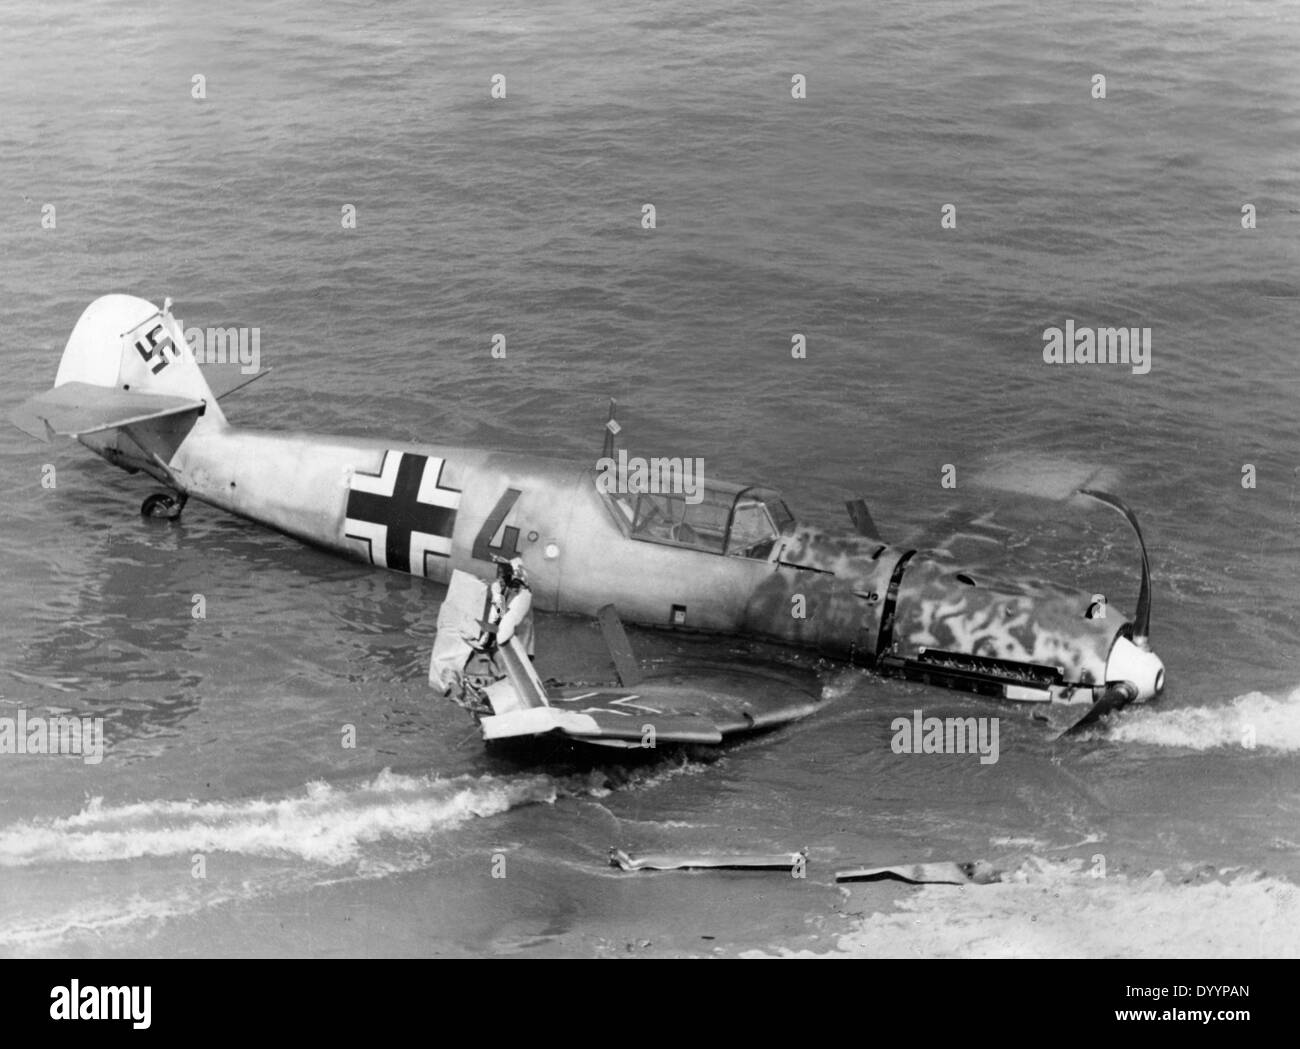 Battle of Britain: shot down German aircraft, shot machine, aircraft rescue, 1940 shot down Messerschm Stock Photo